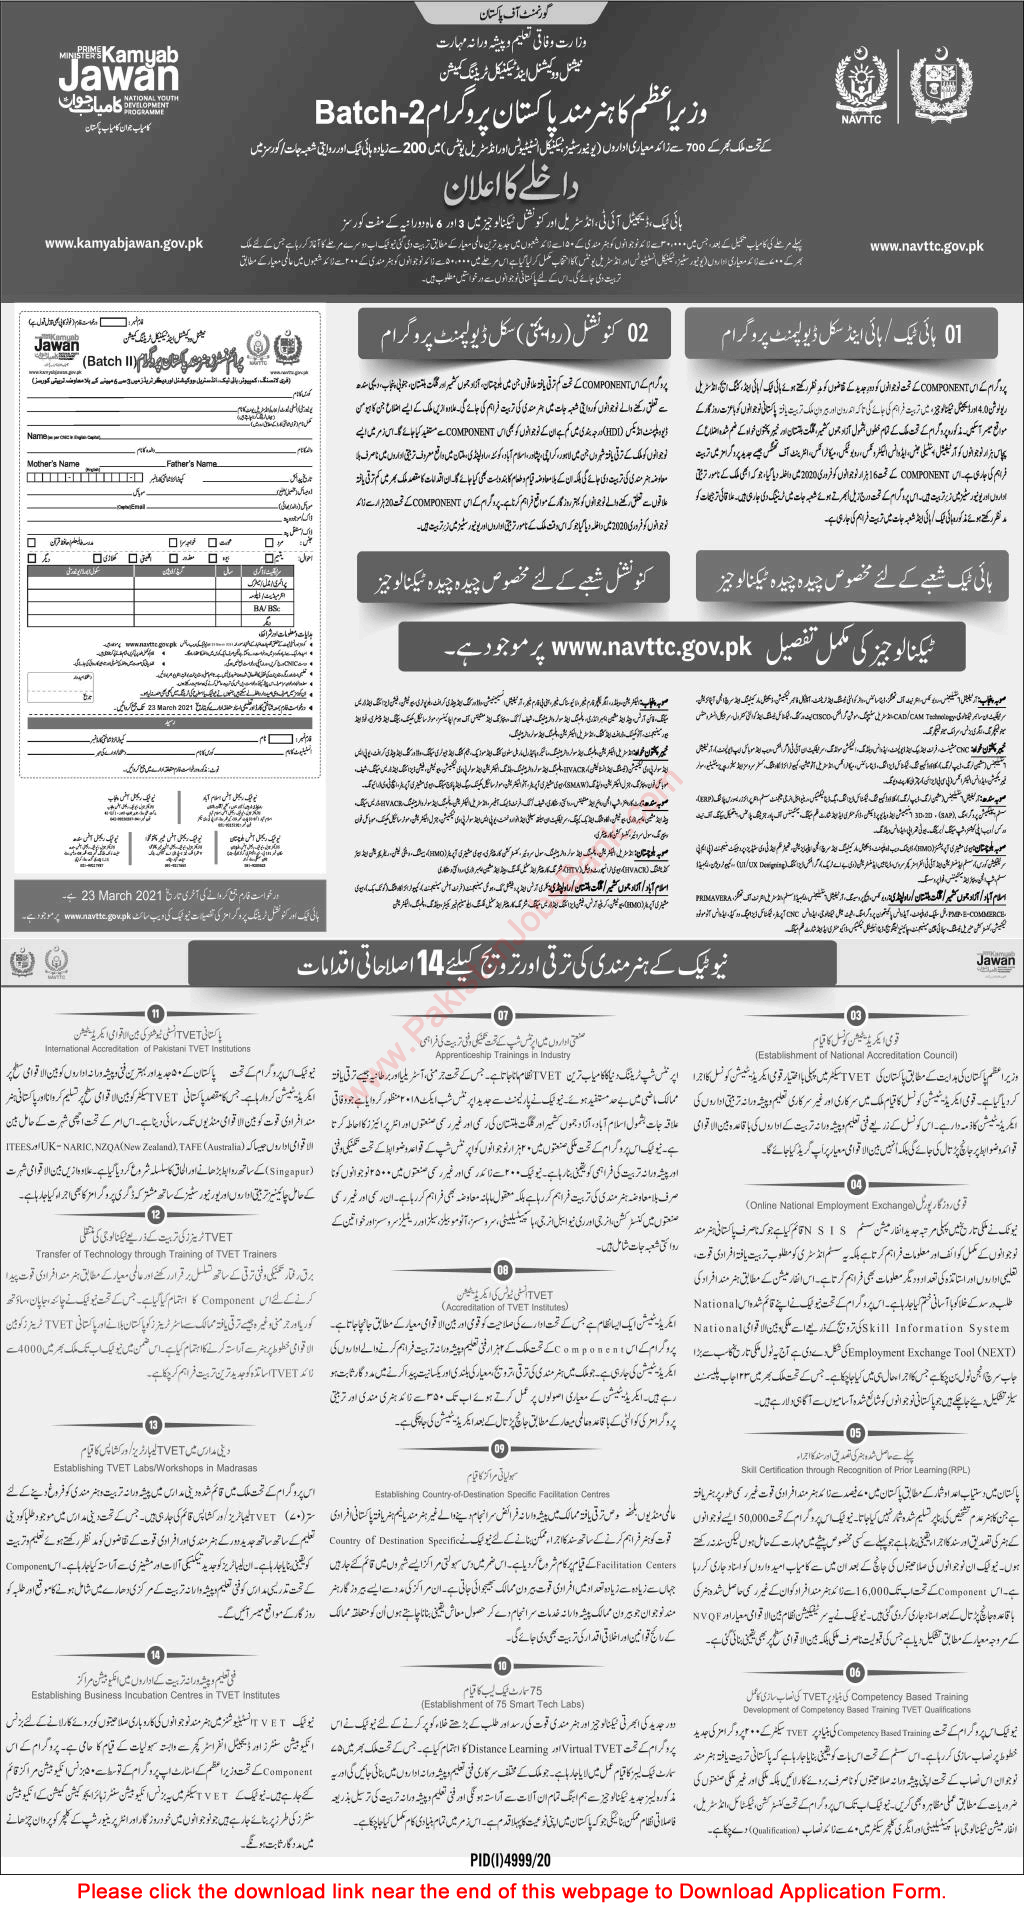 NAVTTC Free Courses March 2021 Online Application Form Prime Minister Kamyab Jawan Hunarmand Pakistan Program Batch 2 Latest